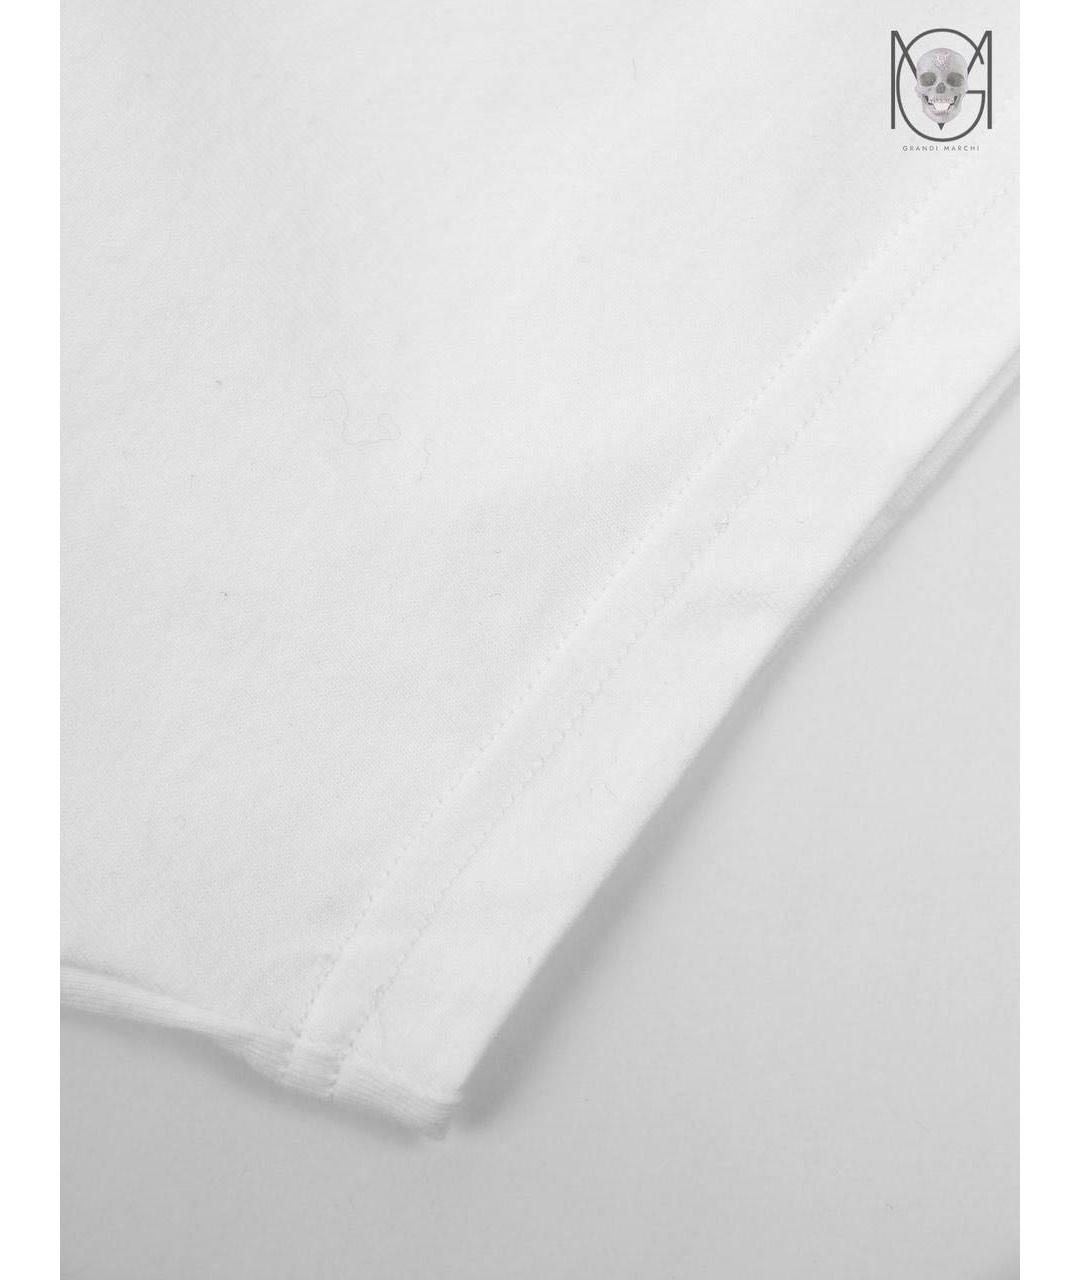 DOMREBEL Белая хлопковая футболка, фото 7